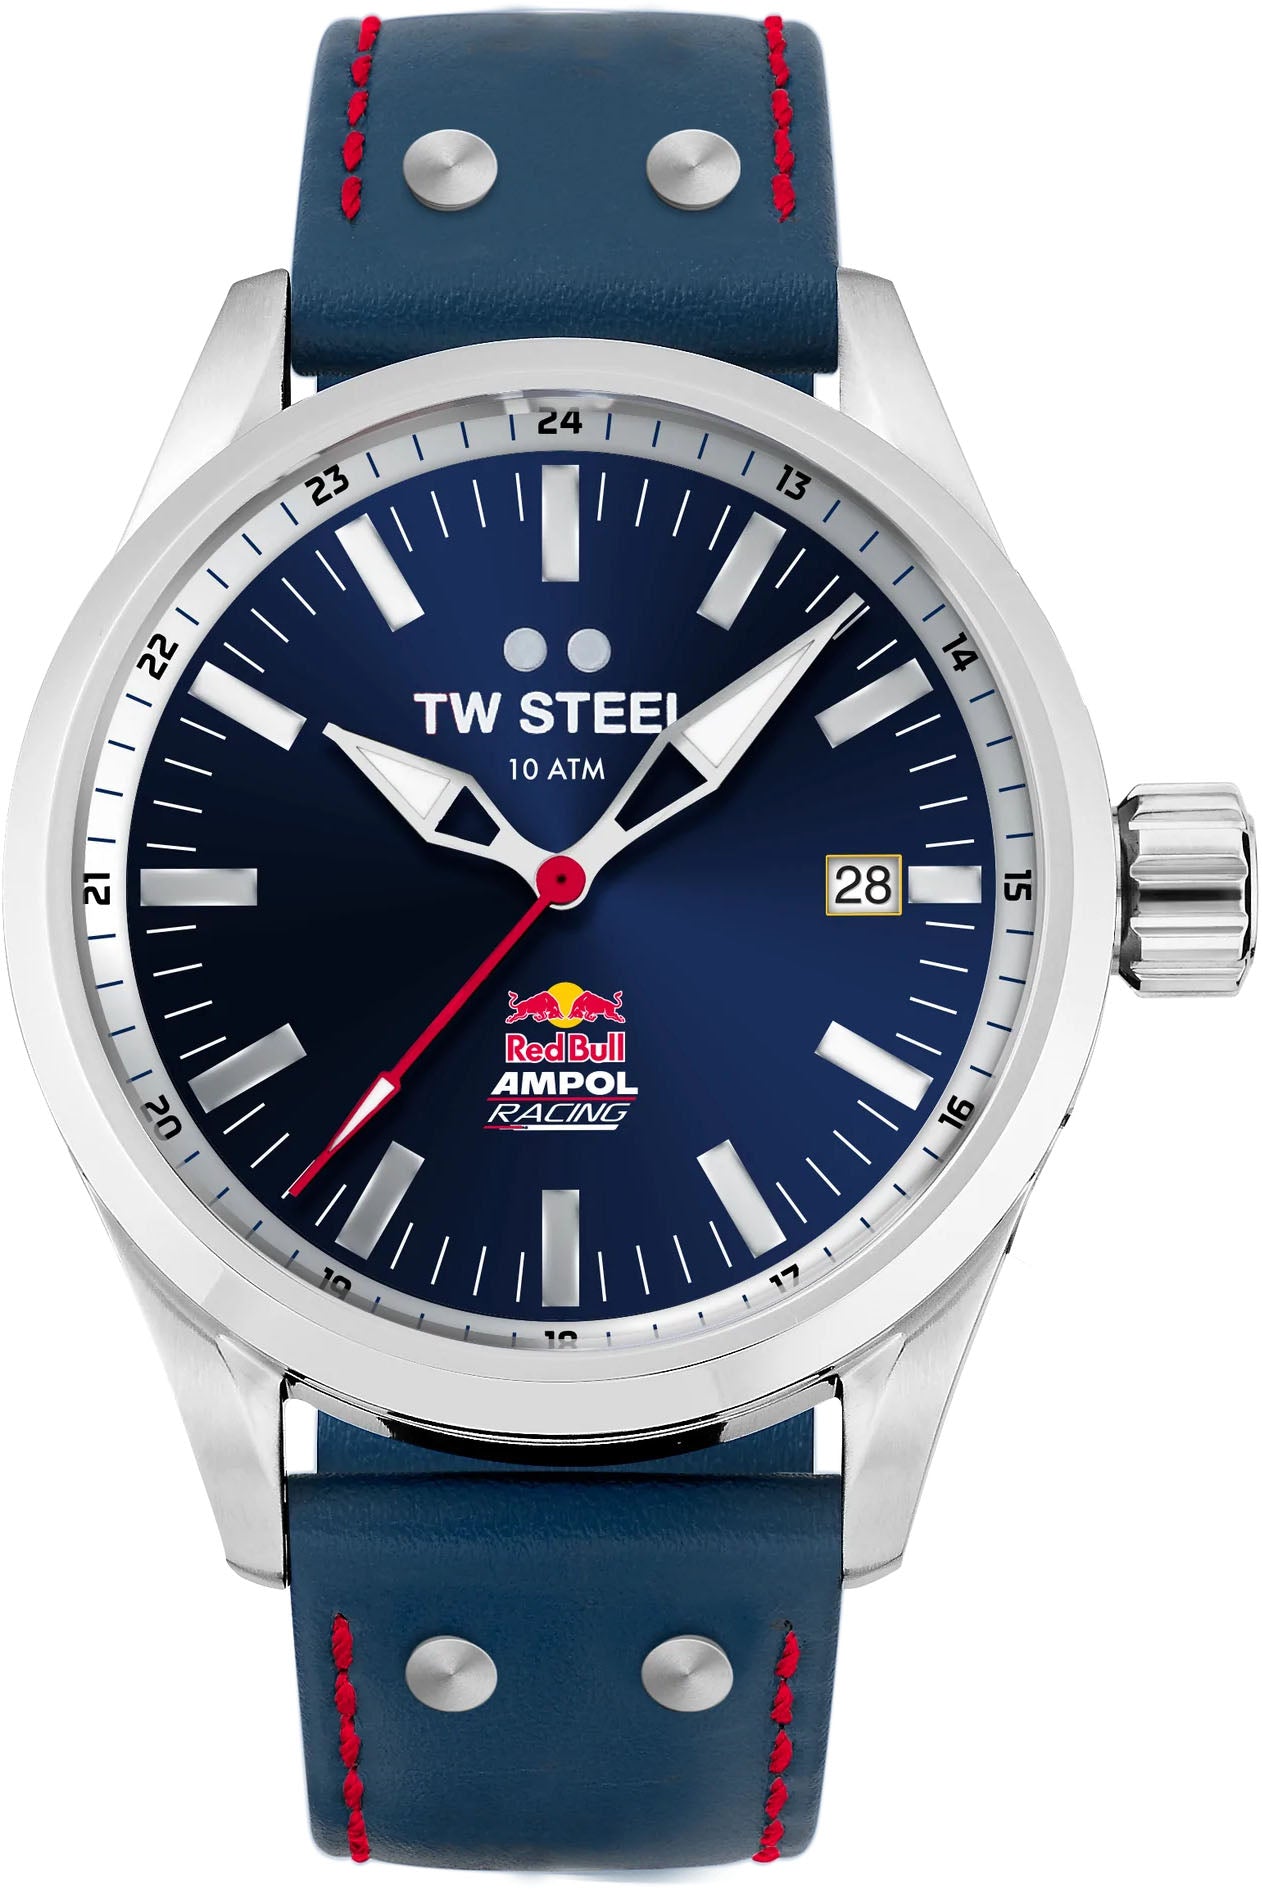 Photos - Wrist Watch TW Steel Watch Red Bull Ampol Racing TW-725 